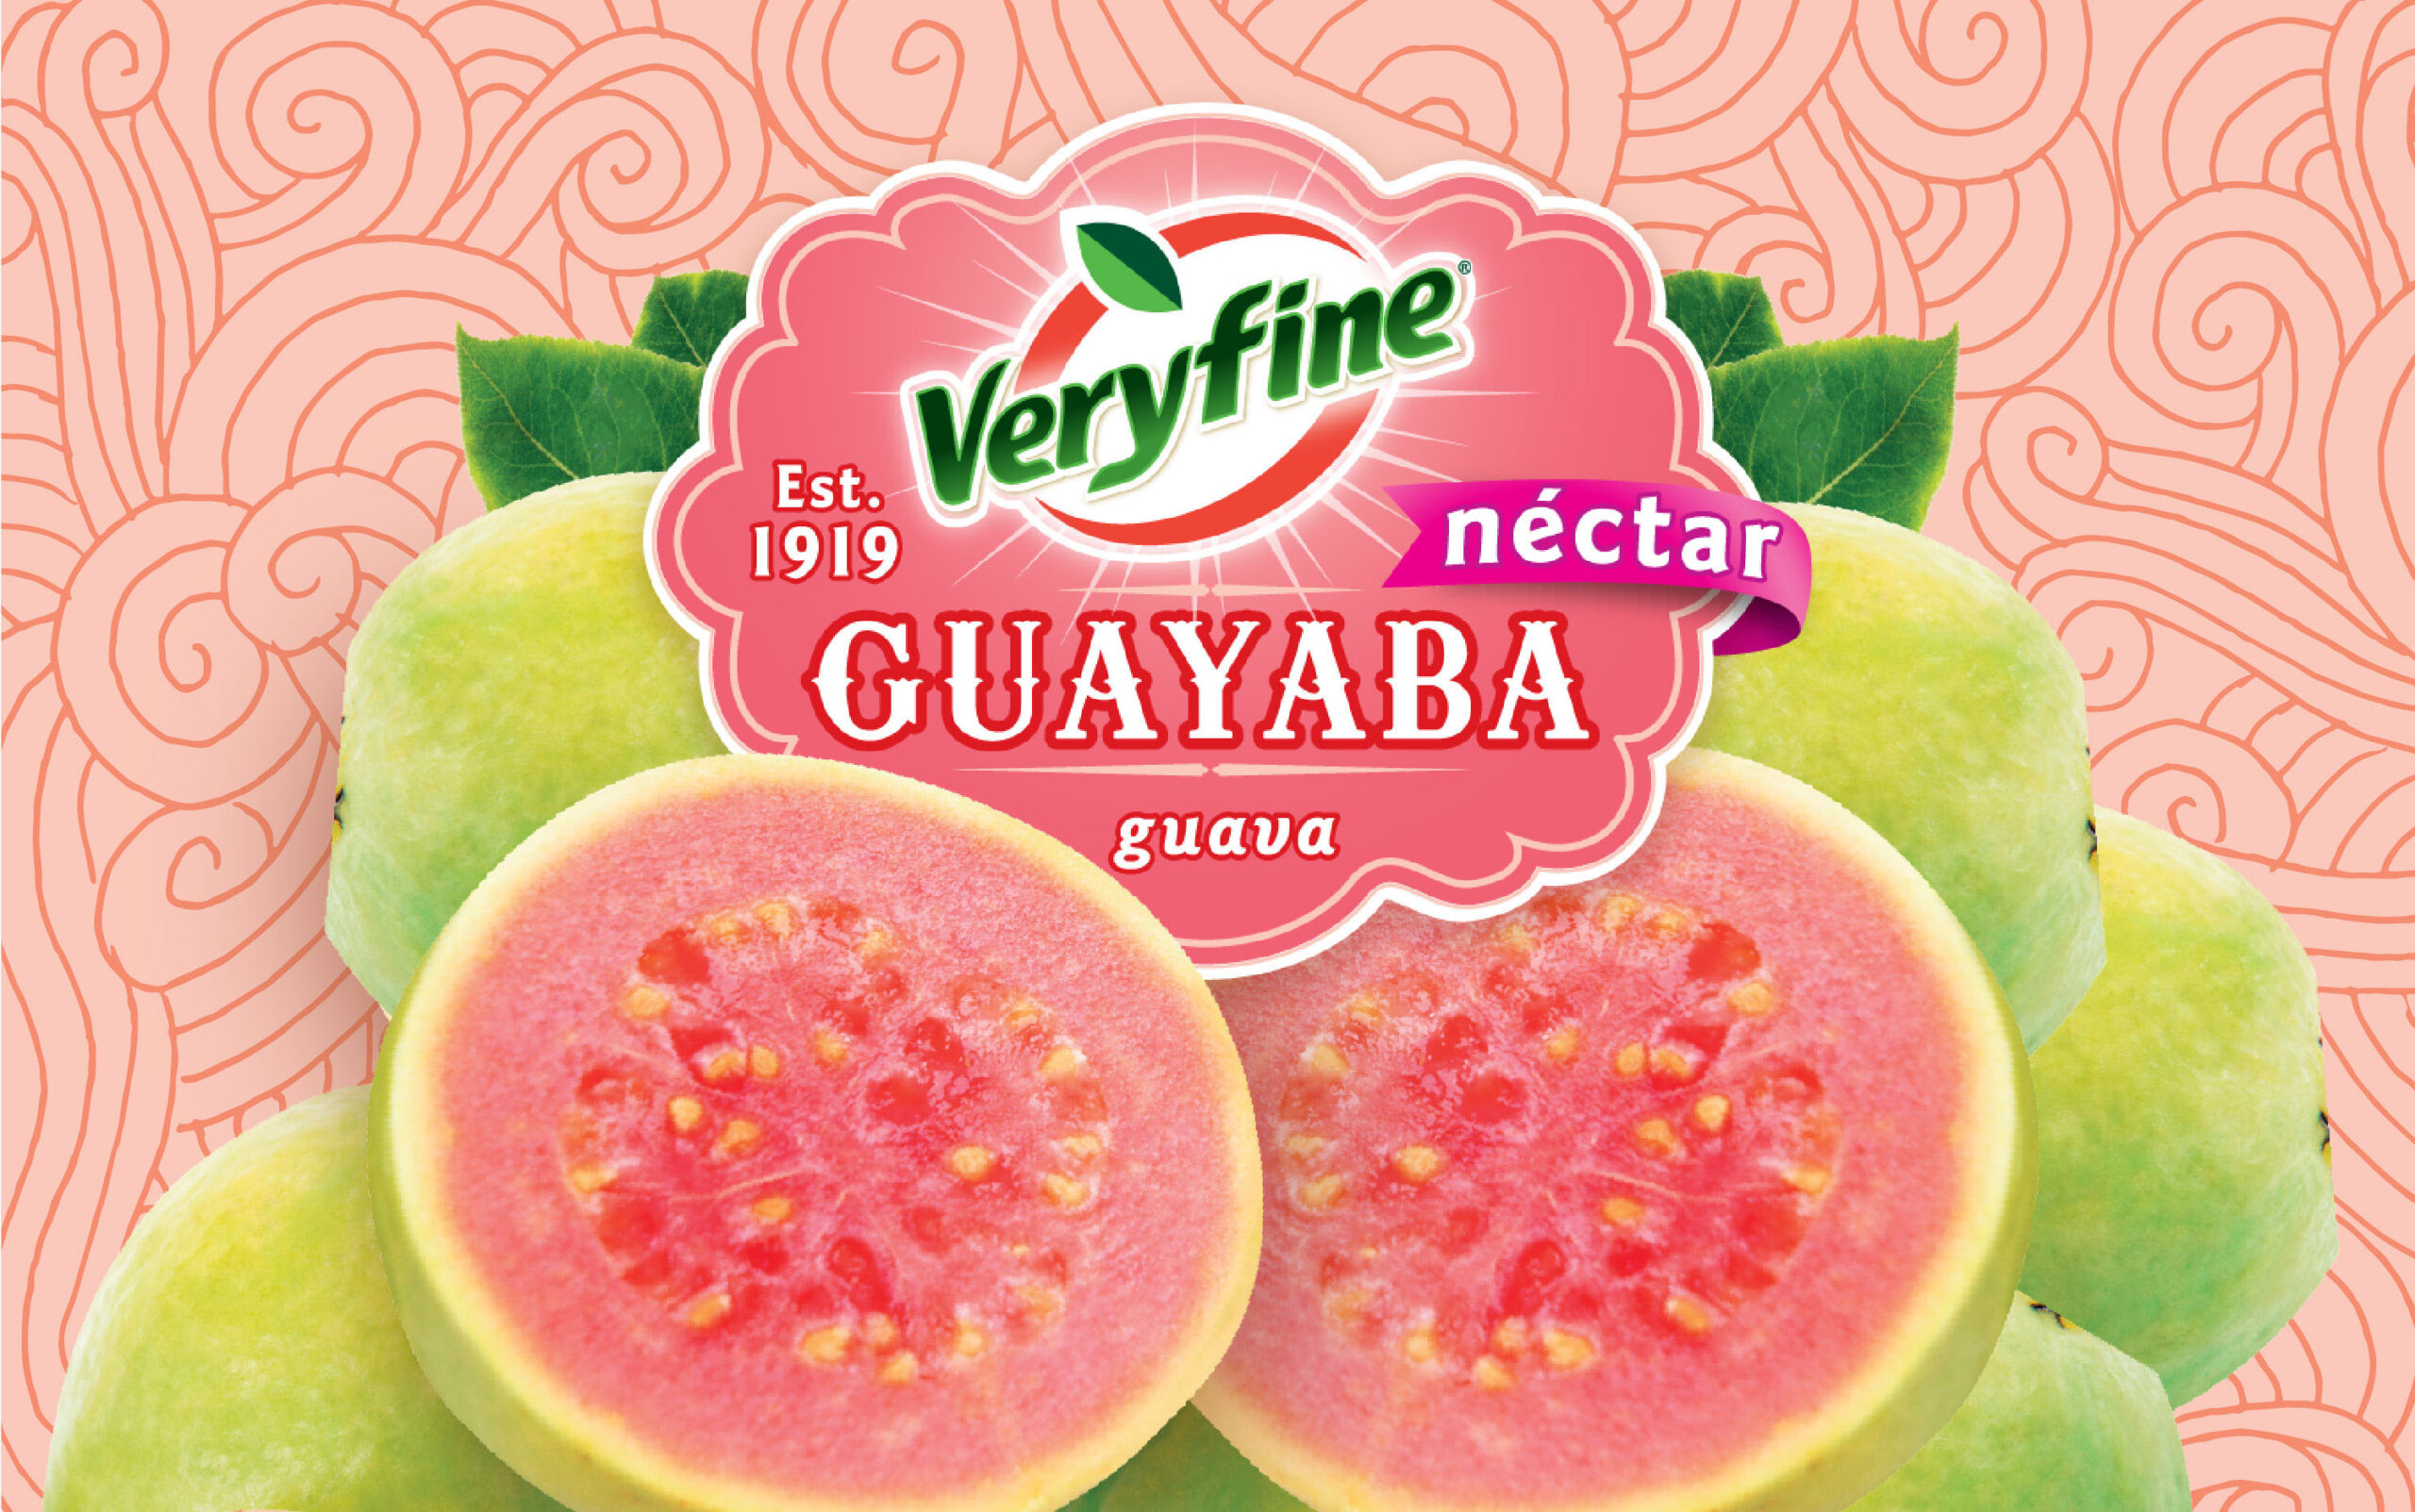 Hispanic guava juice label design for Veryfine